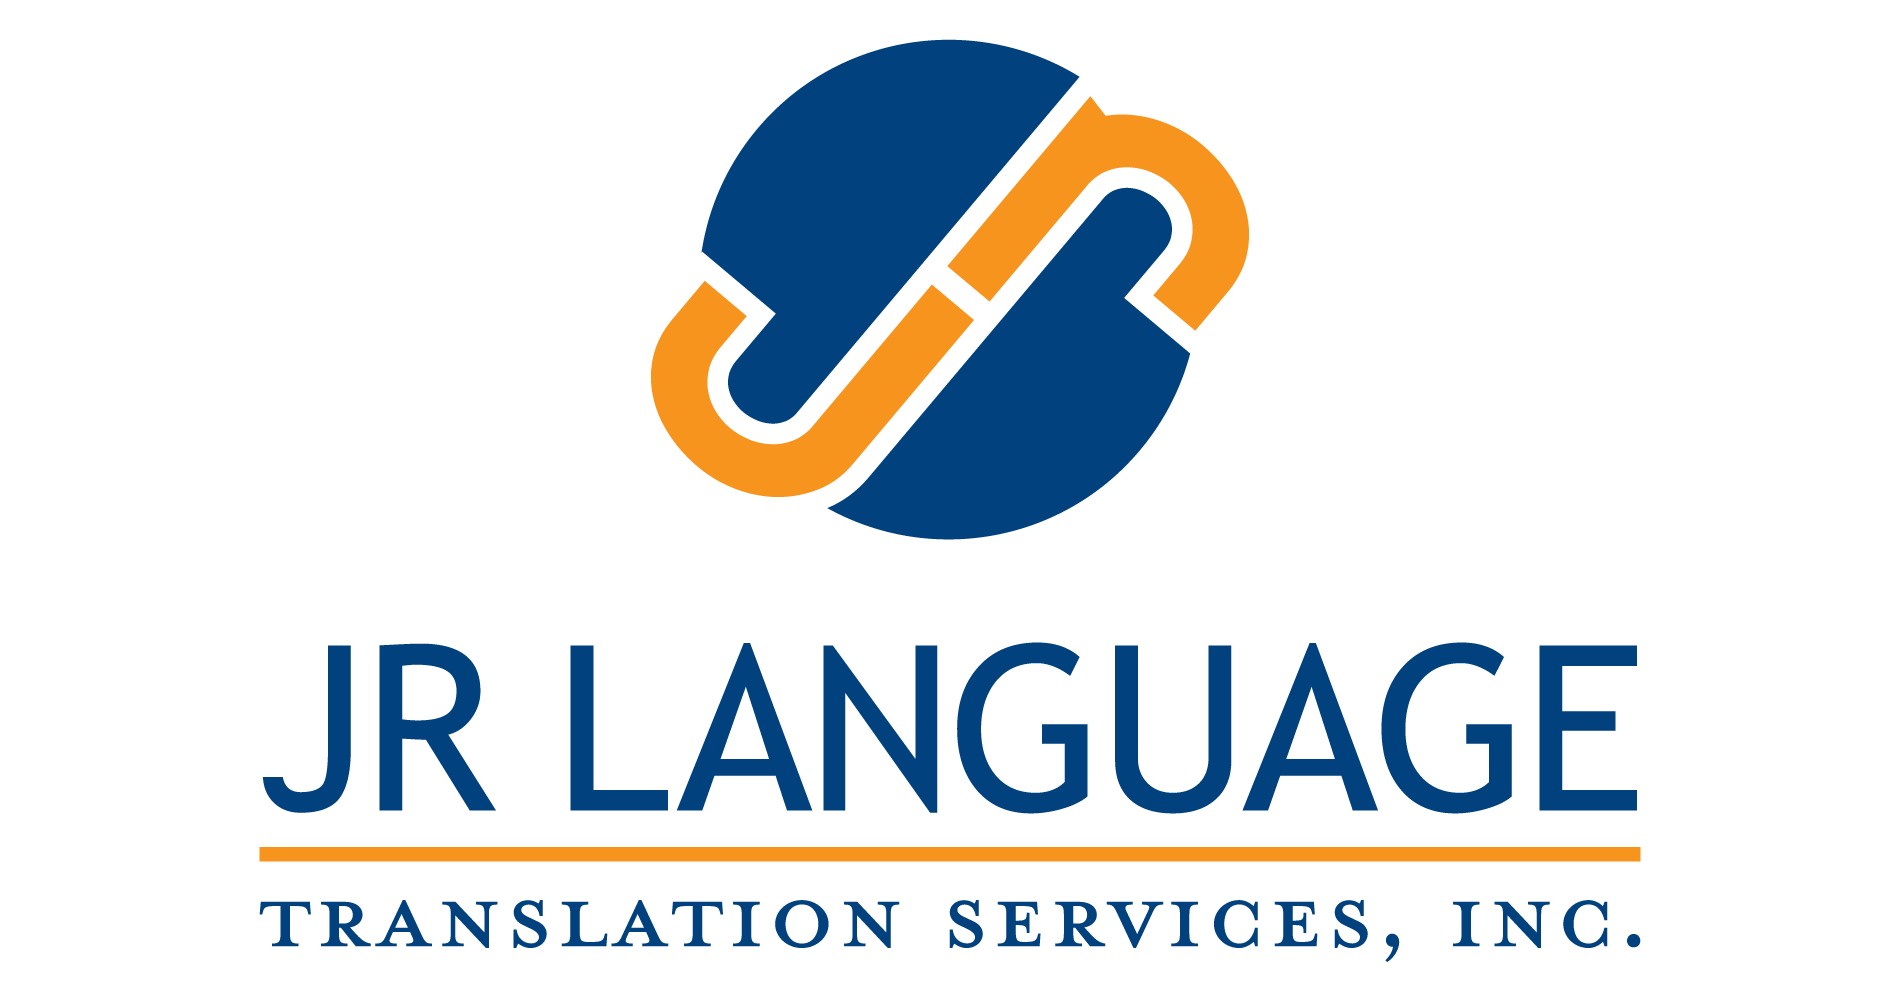 JR Language Translation Services, Inc.